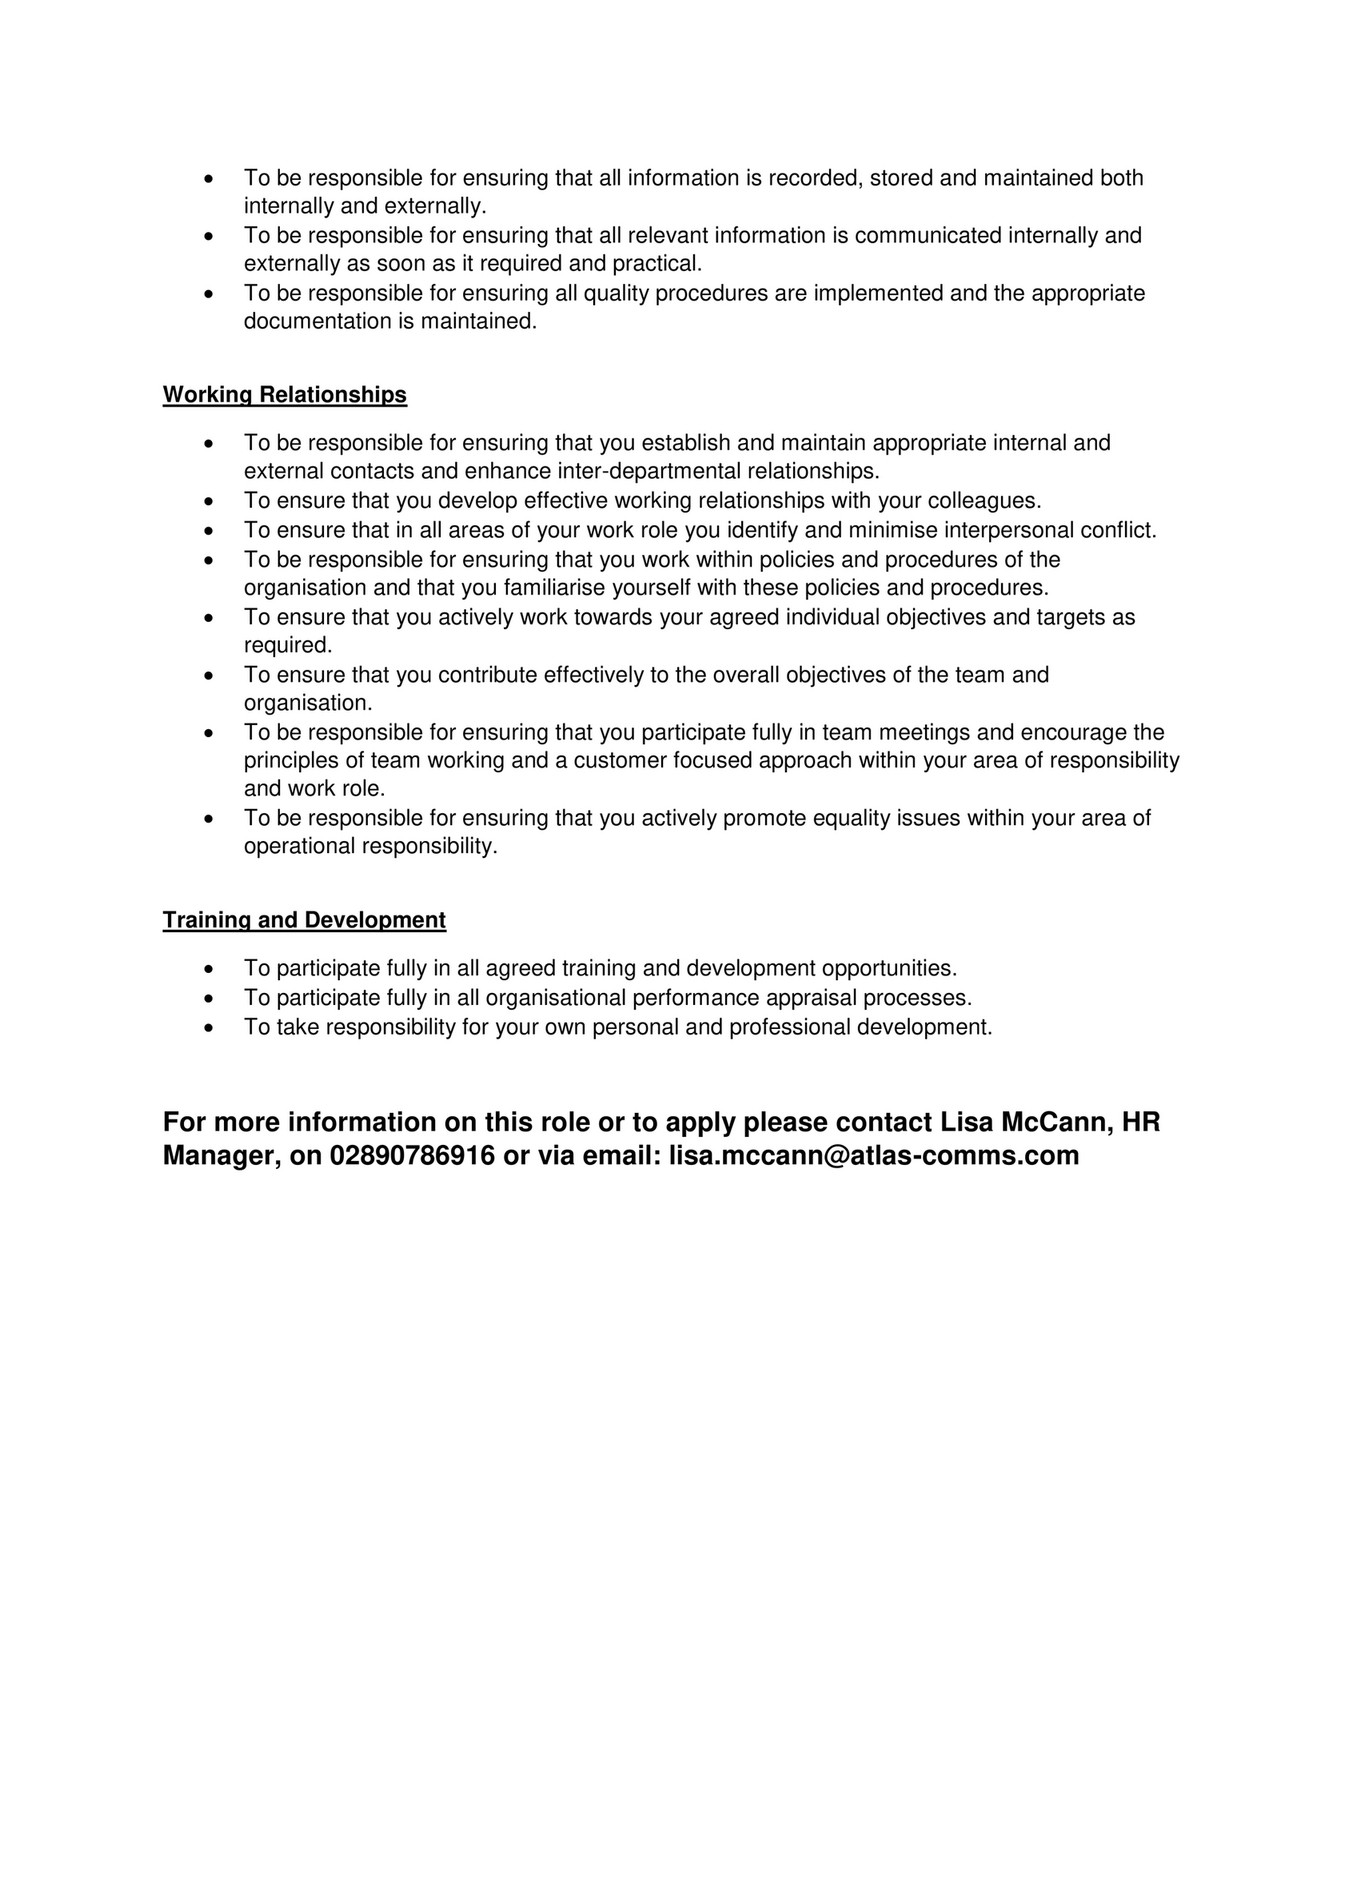 My Publications Customer Service Advisor Job Description Page